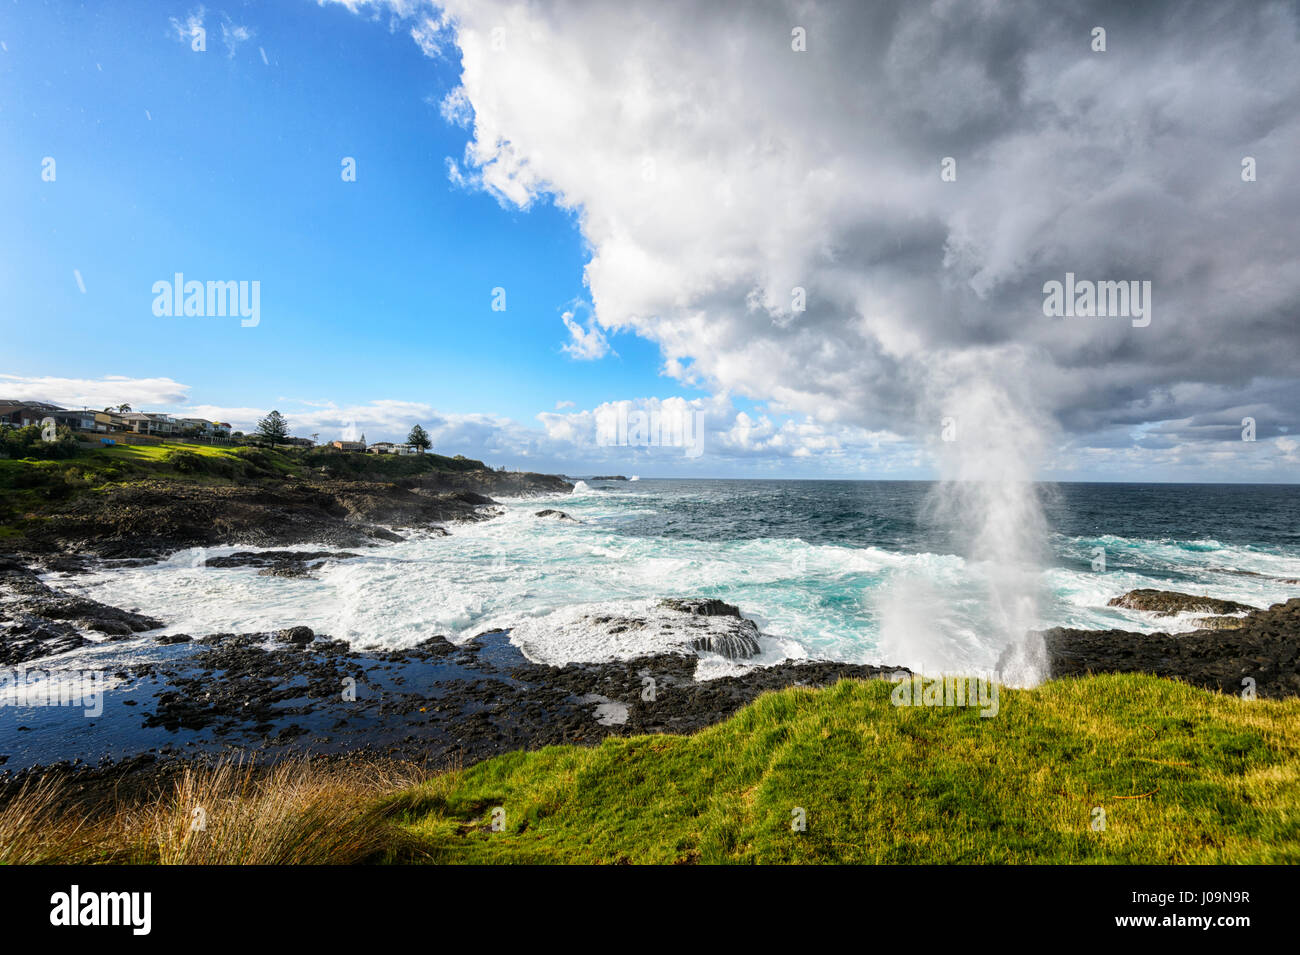 Dramatic view of Kiama Little Blow Hole gushing during a storm, Kiama, Illawarra Coast, New South Wales, NSW, Australia Stock Photo